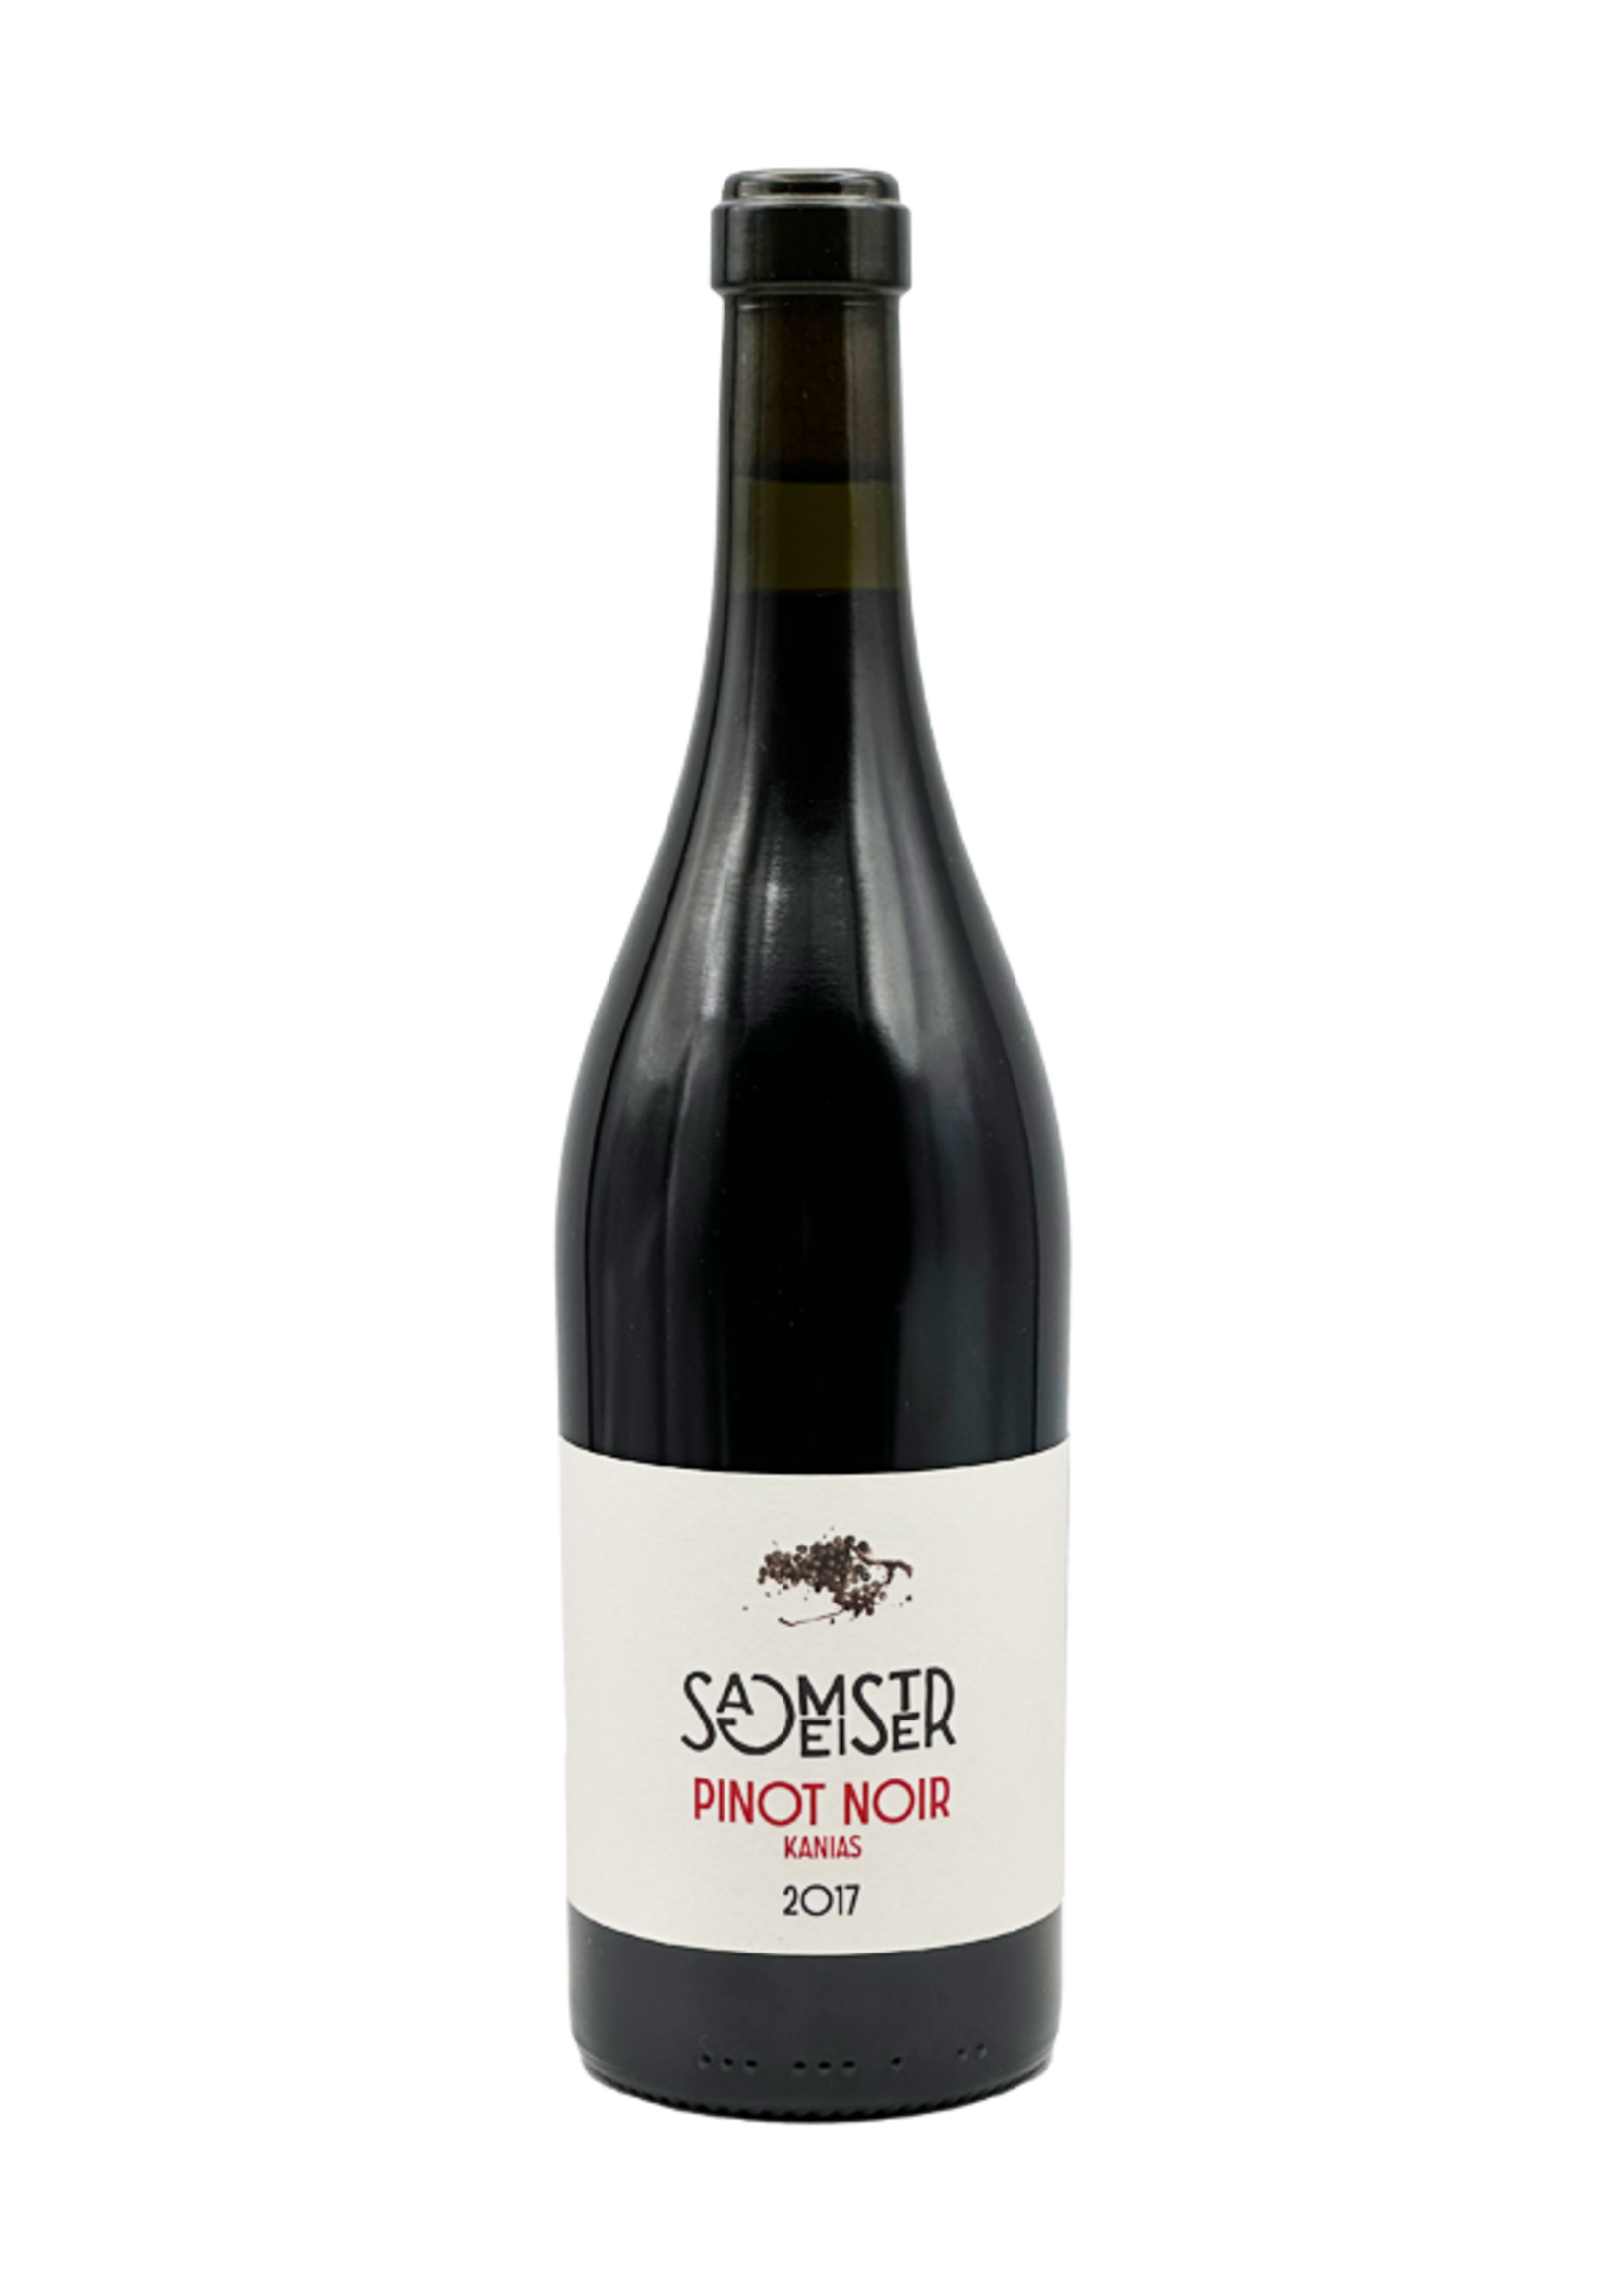 Sagmeister Pinot Noir "Kanias" 2017 Sagmeister